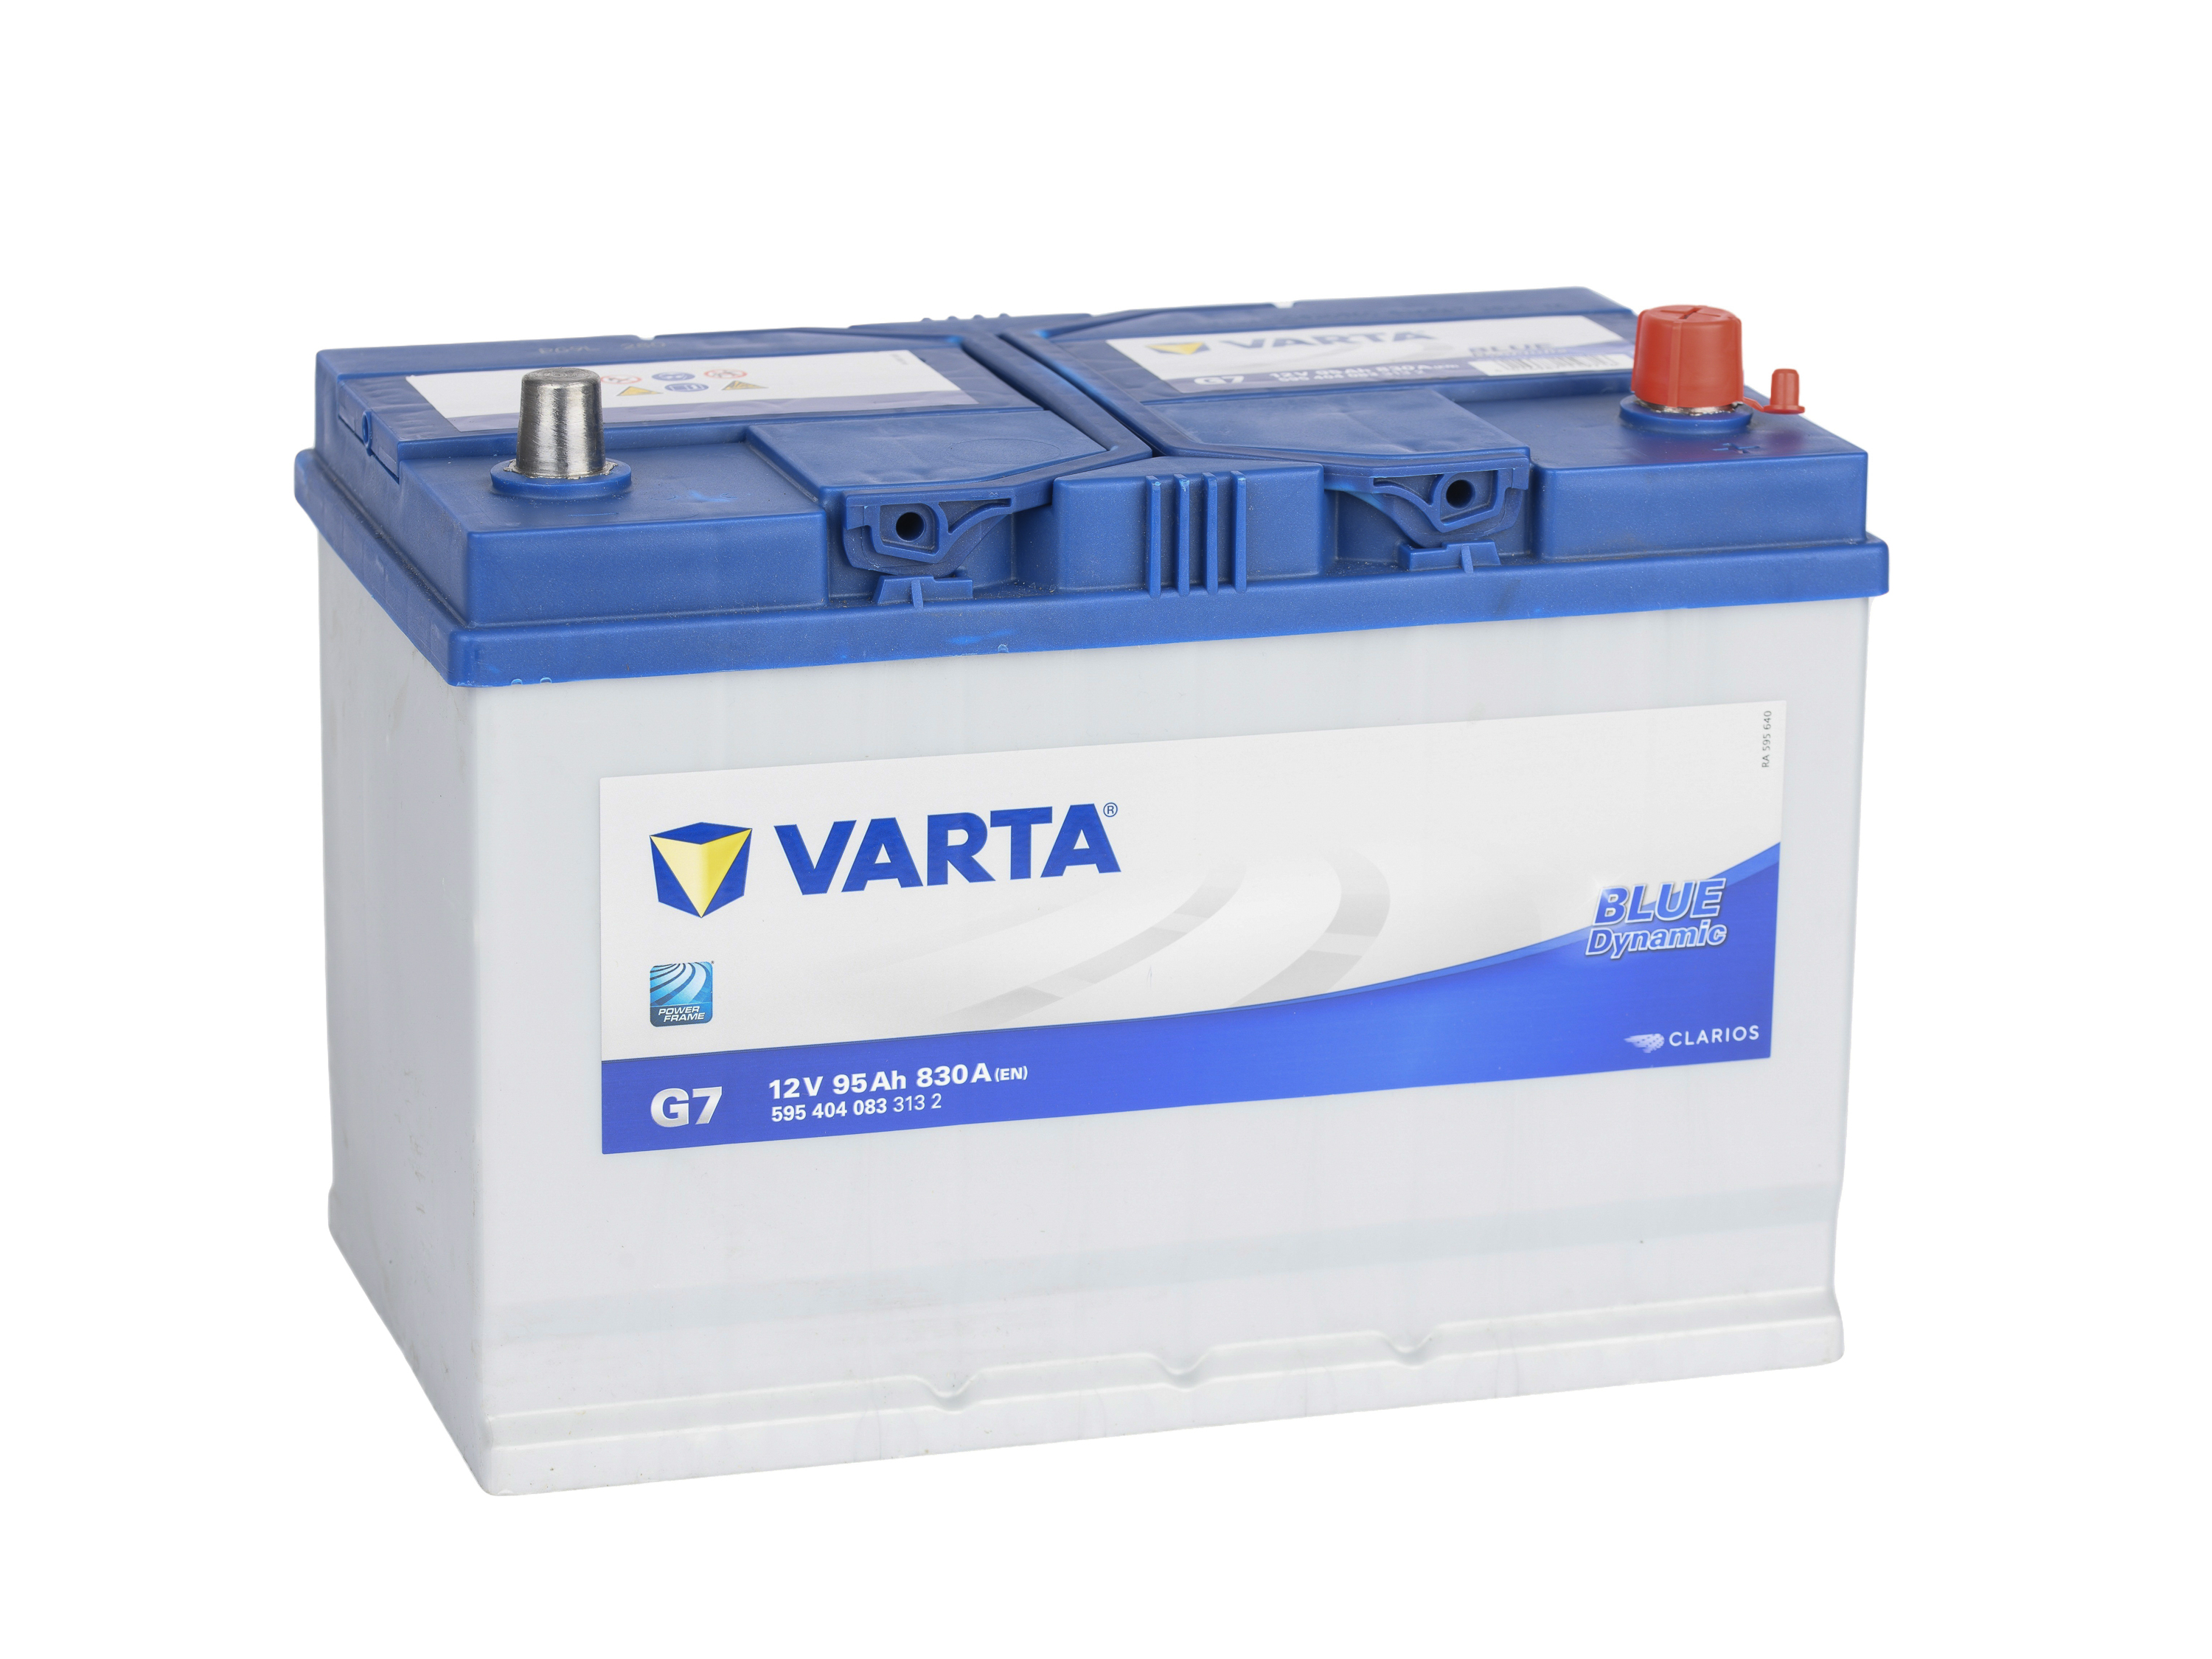 VARTA batteri blå dynamisk G7 595.404.083 12V/95Ah